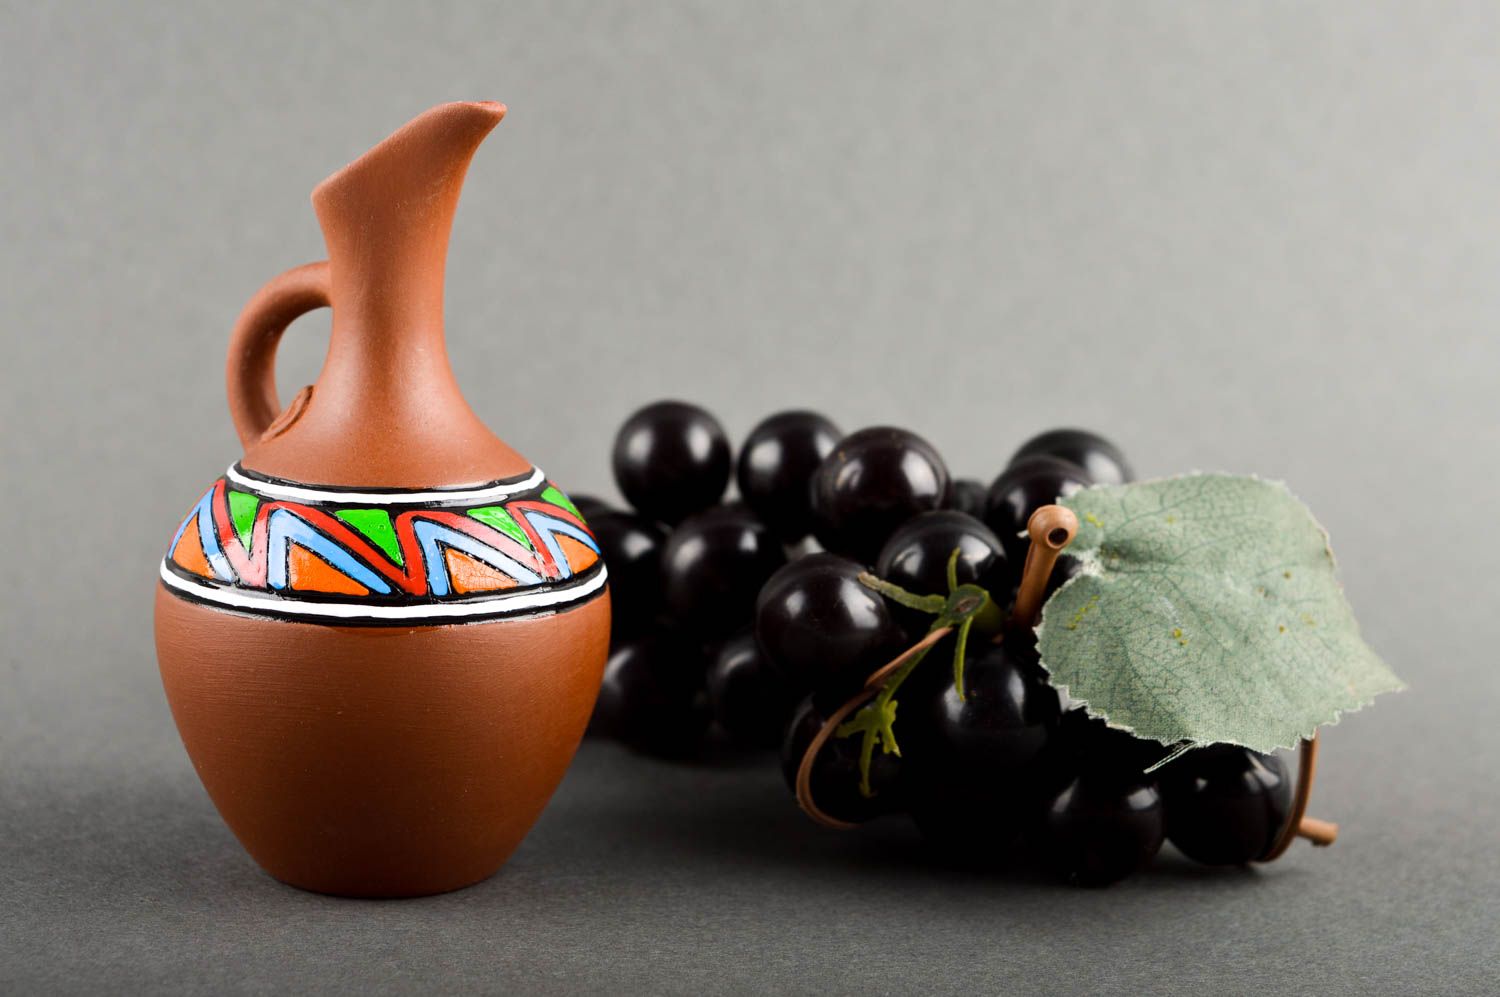 5 oz ceramic handmade wine carafe in terracotta color 0,16 lb photo 1